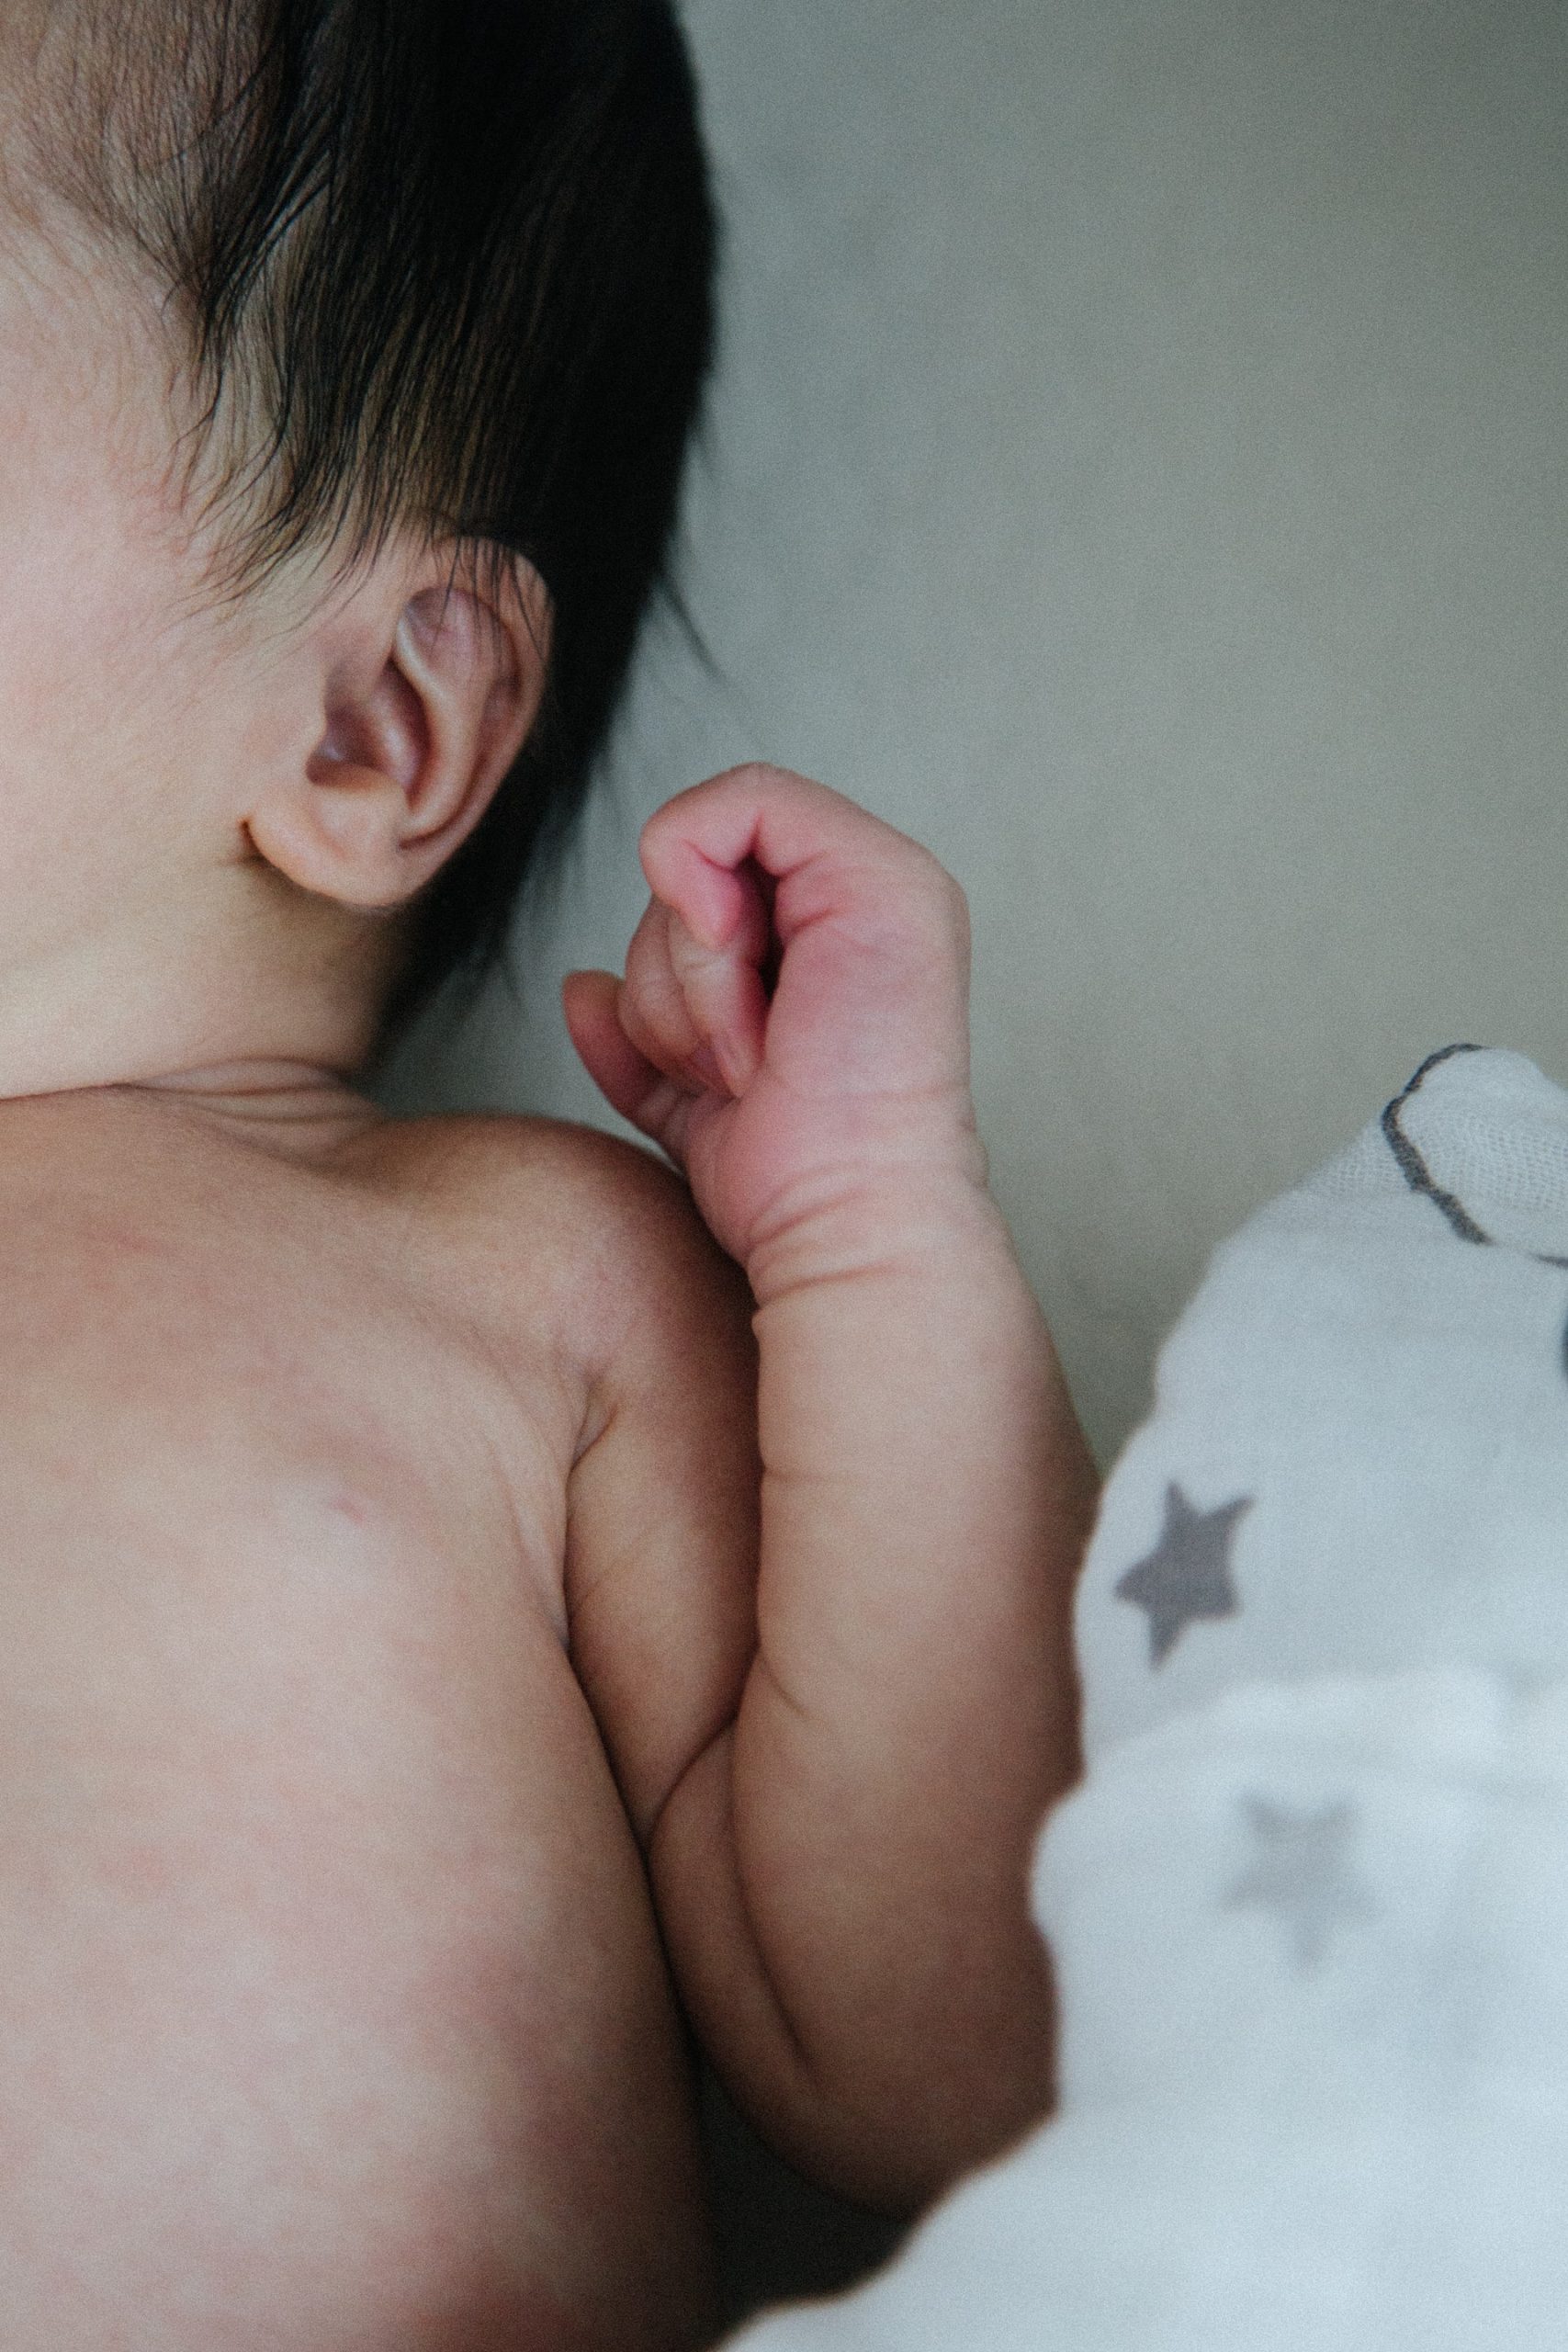 skin rashes in babies, co-sleeping